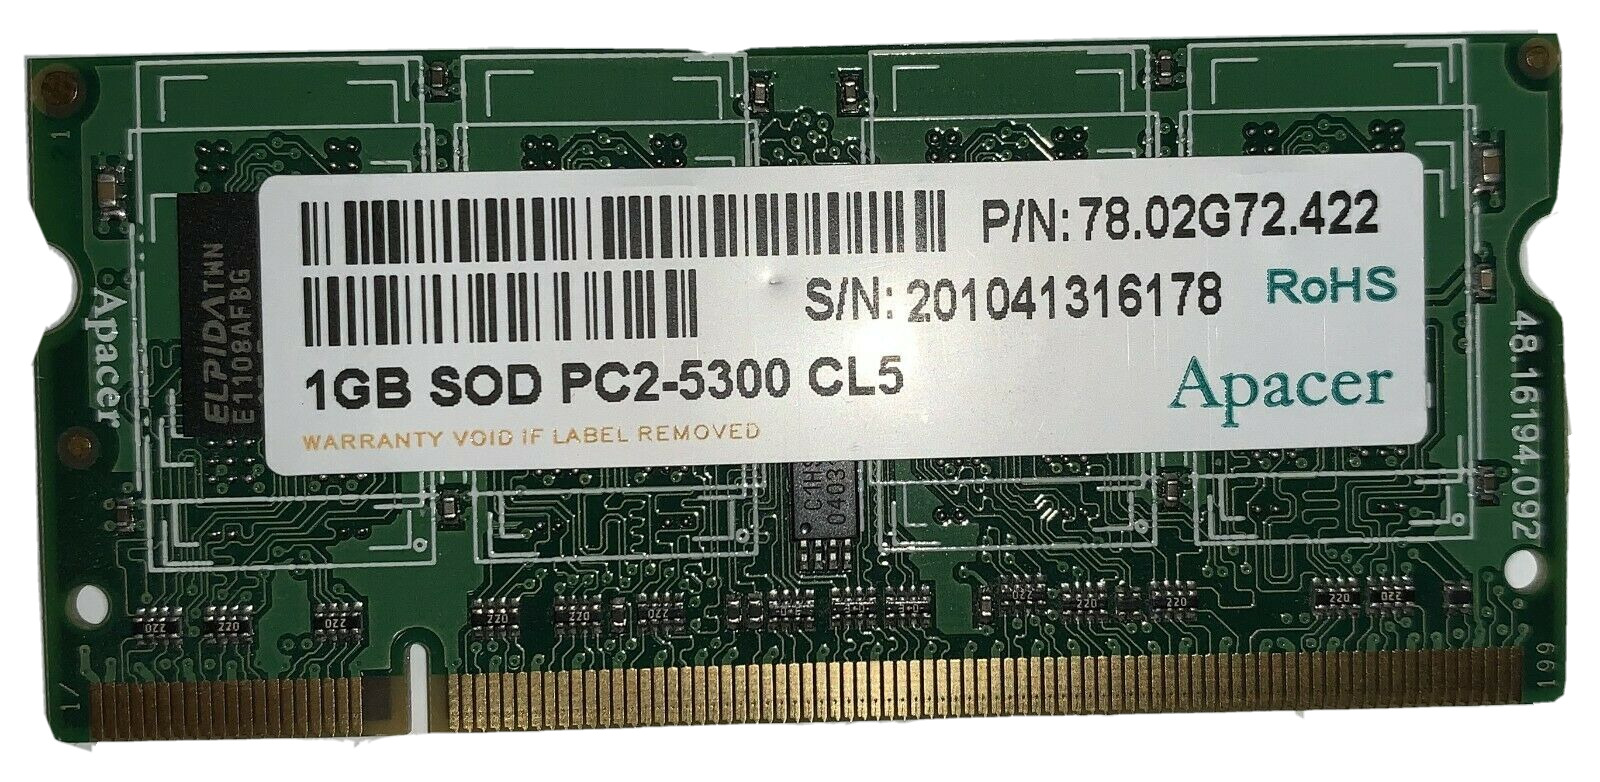 Apacer (2 x 1 GB) 667MHz PC2-5300 Non ECC CL5 200-Pin DDR2 Laptop SO-DIMM Memory